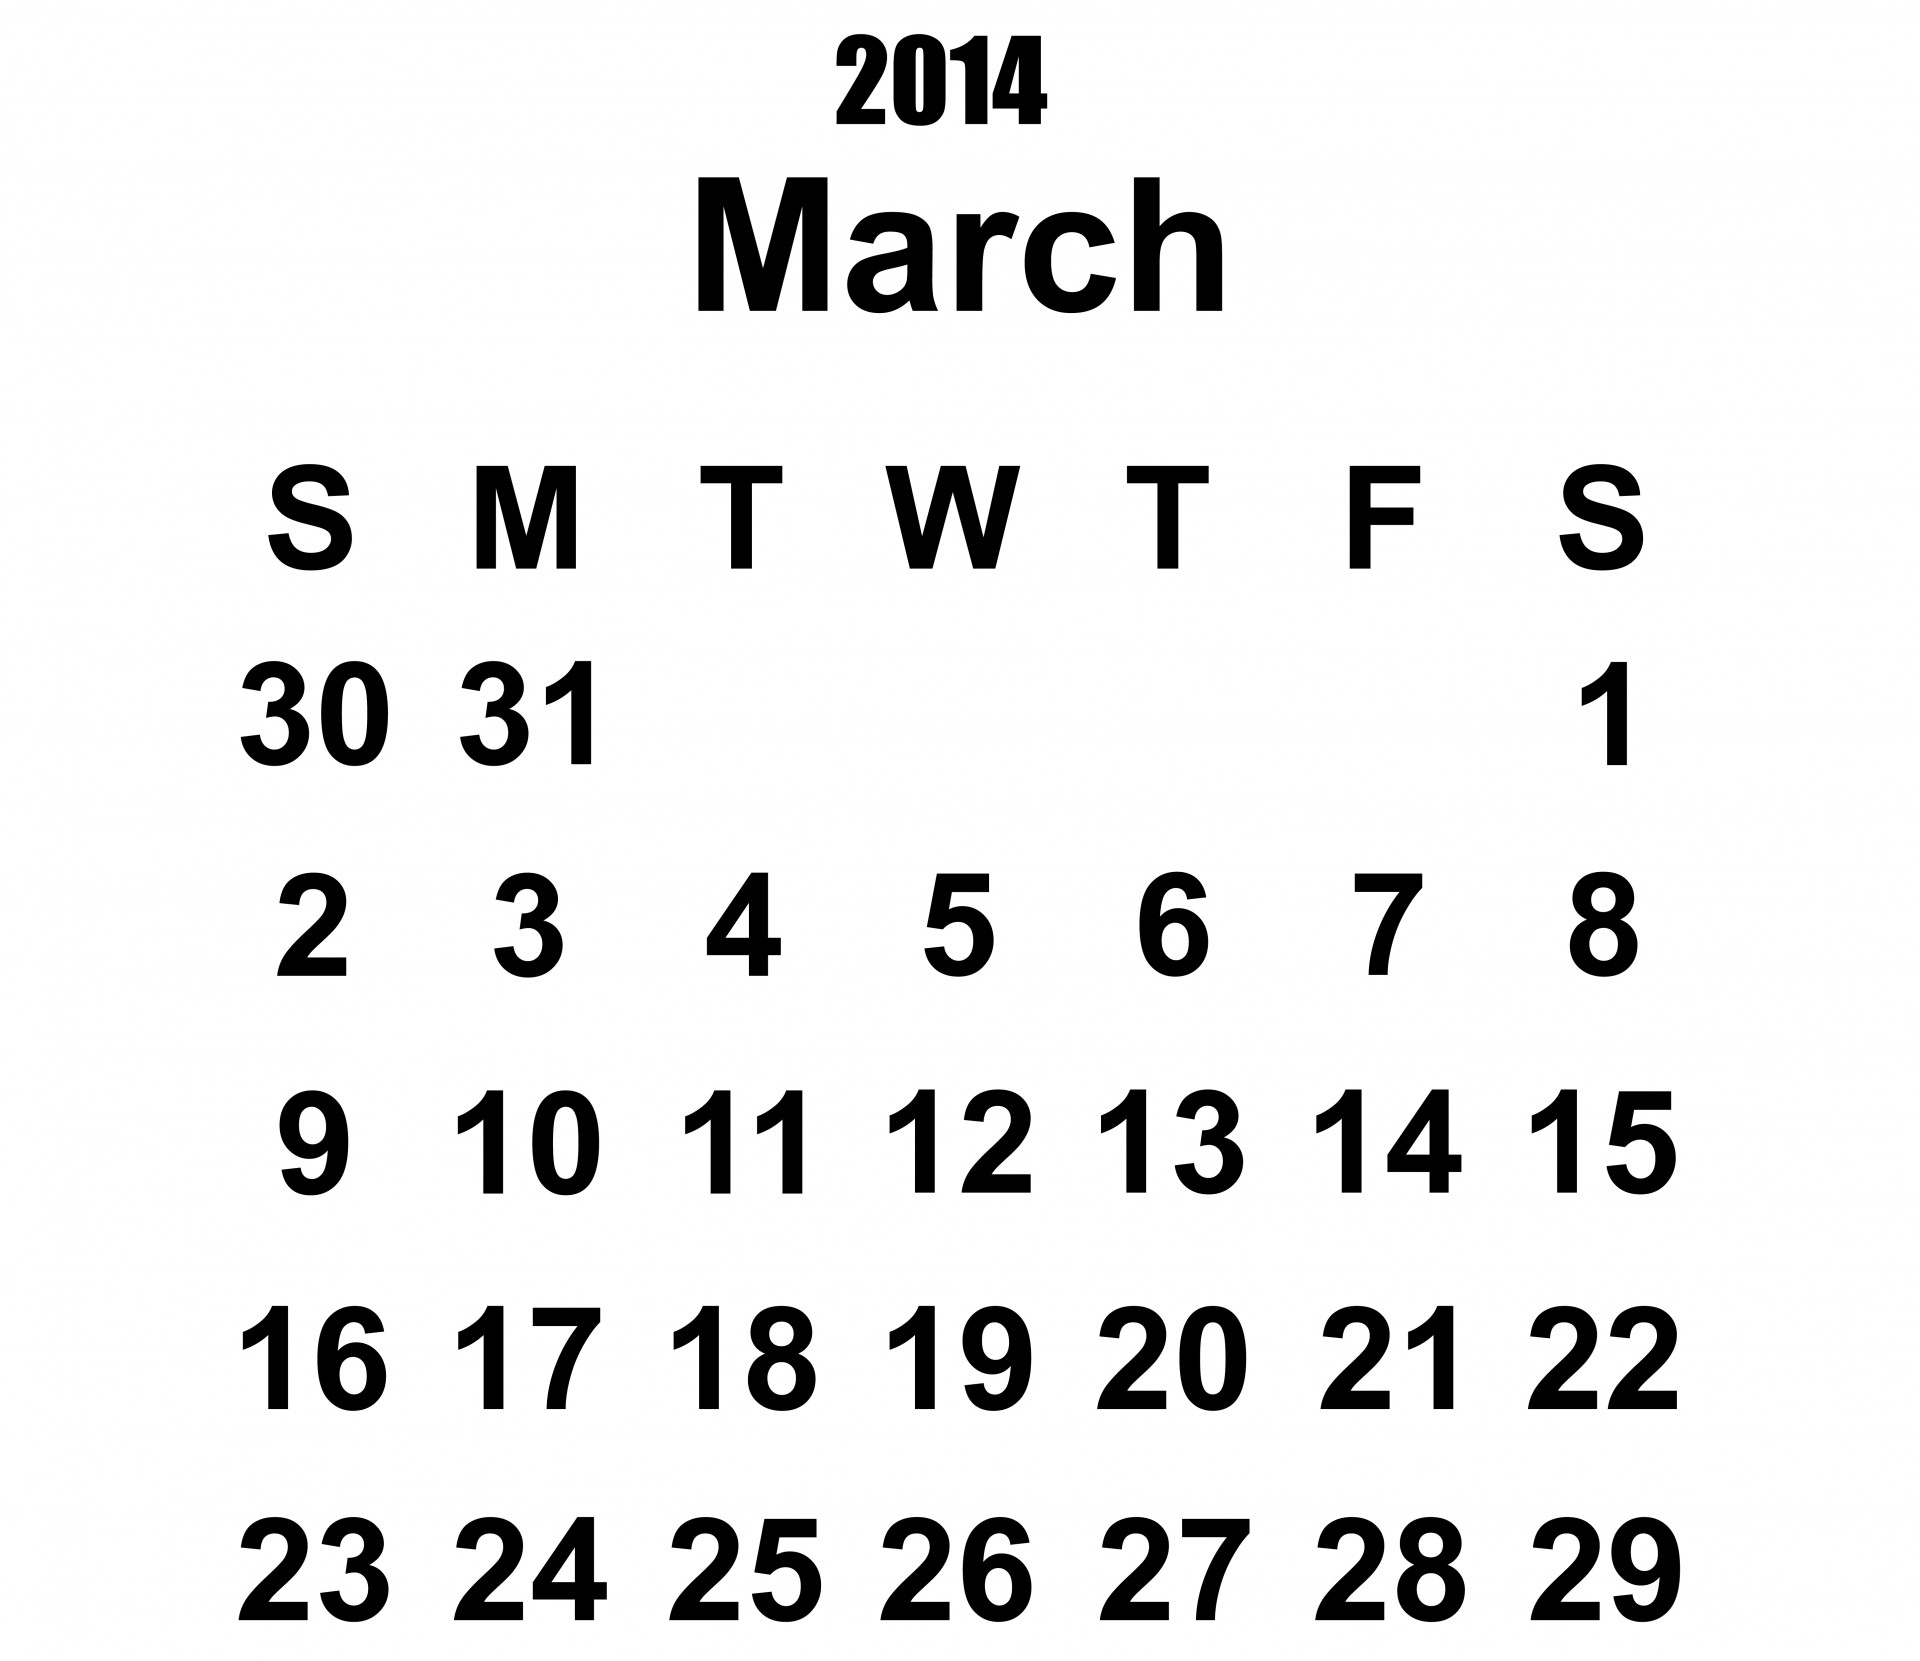 14 Calendar March 2104 Calendar 14 March Calendar Free Image From Needpix Com